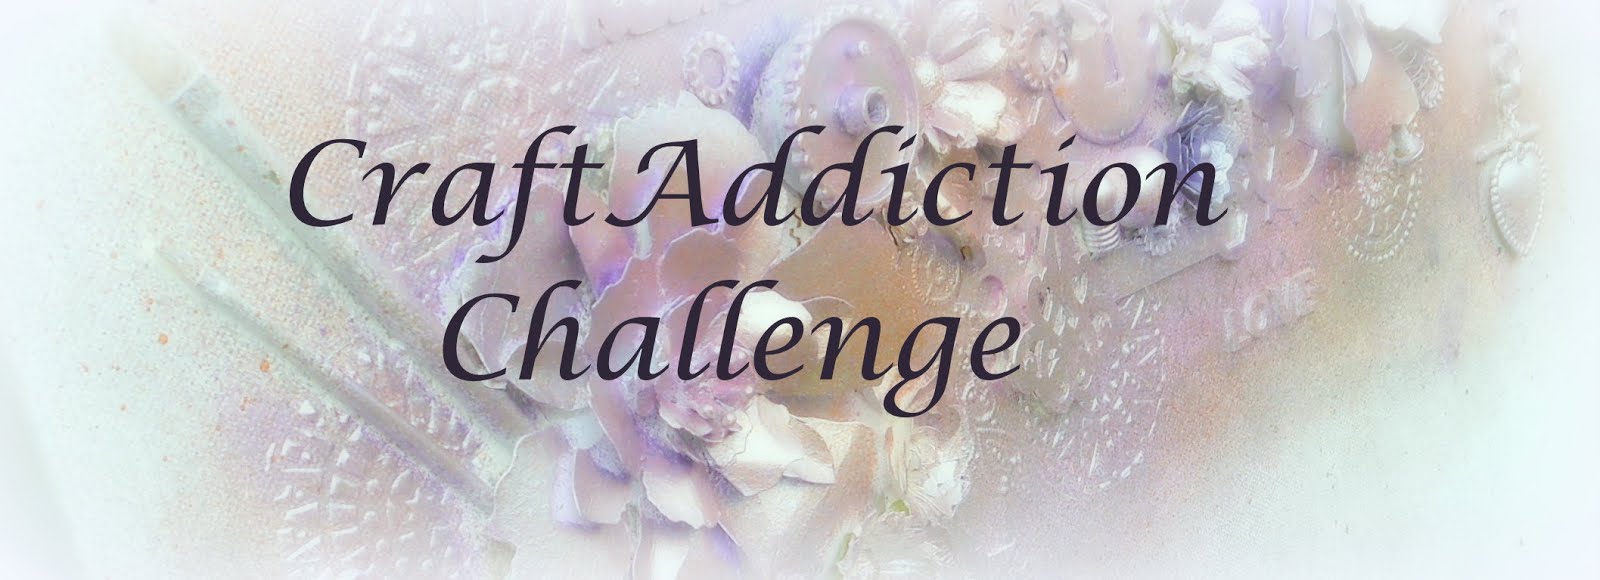 CraftAddiction-Challenge